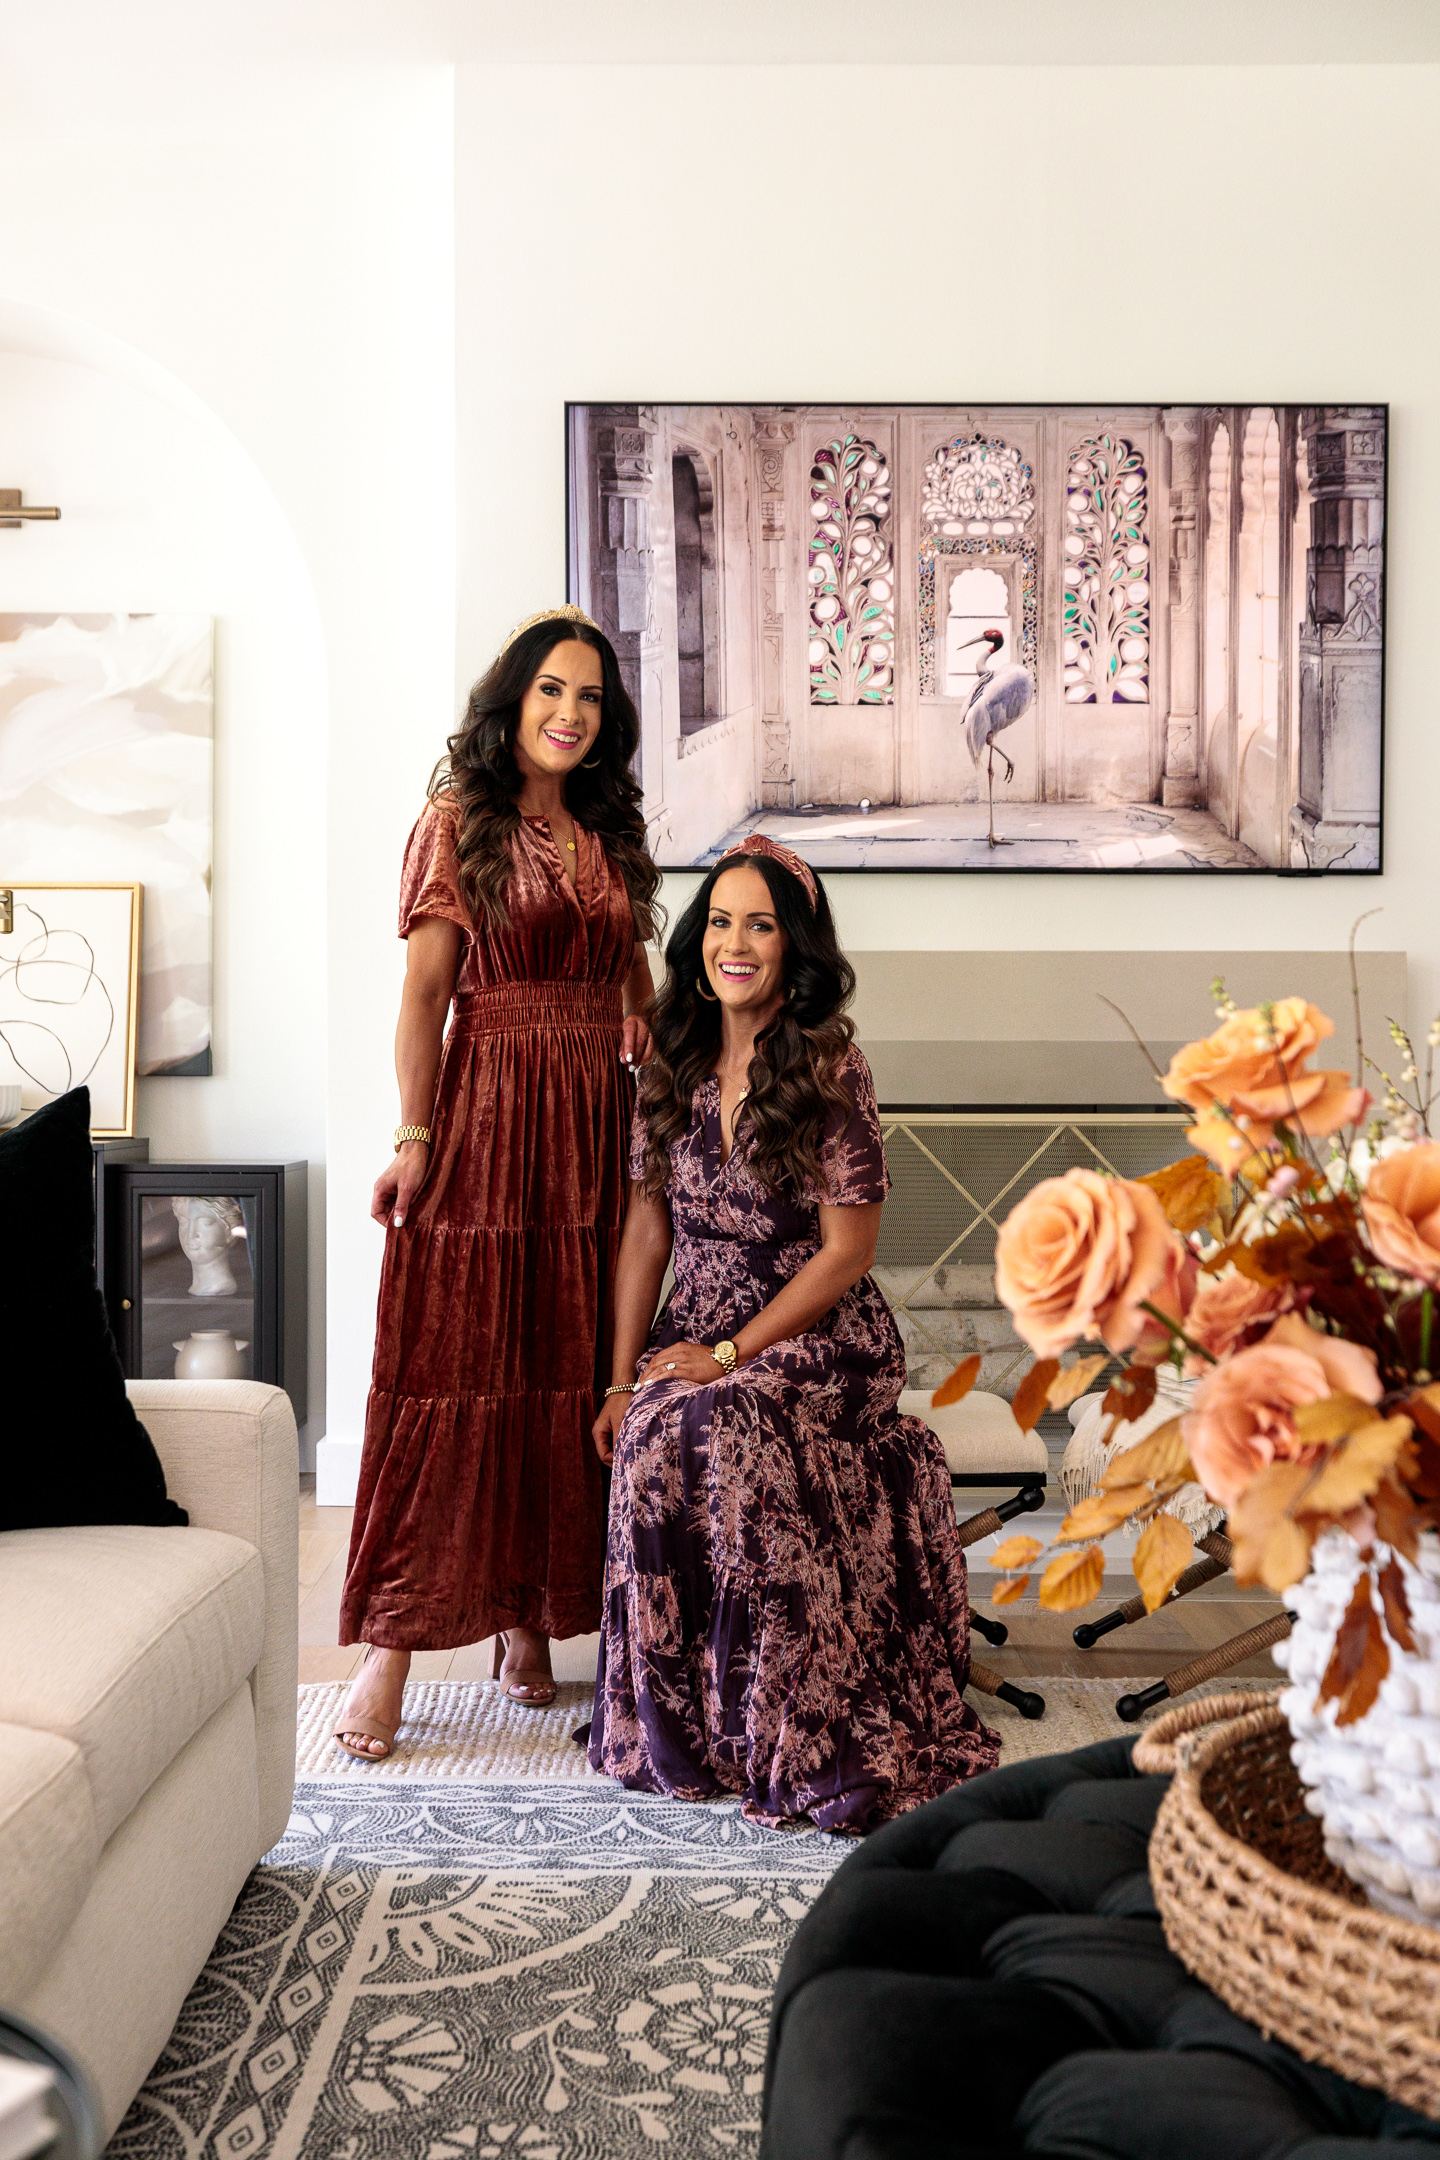 Lindsay's Chic Black & White Living Room Reveal - The Double Take Girls